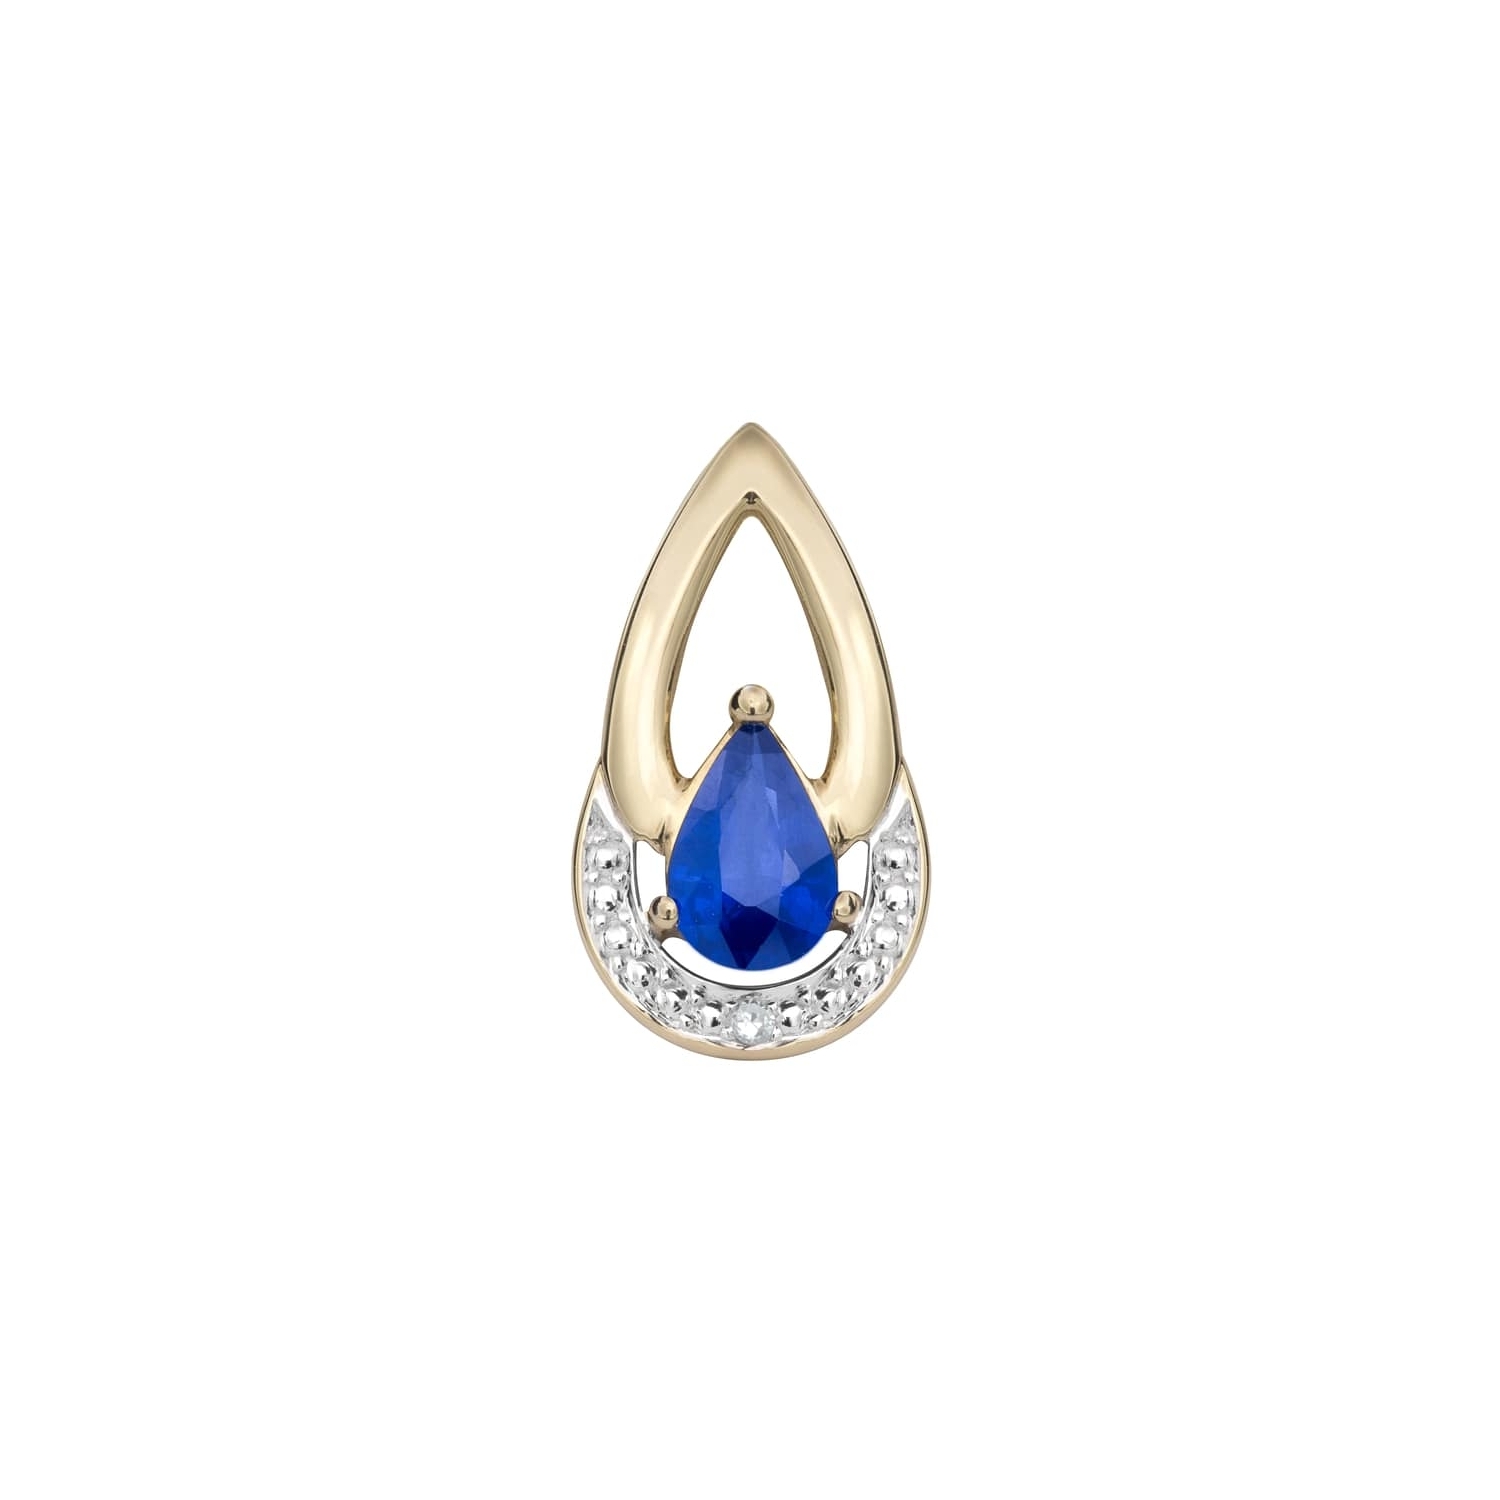 Gold pendant with gemstones "Sapphire 30"